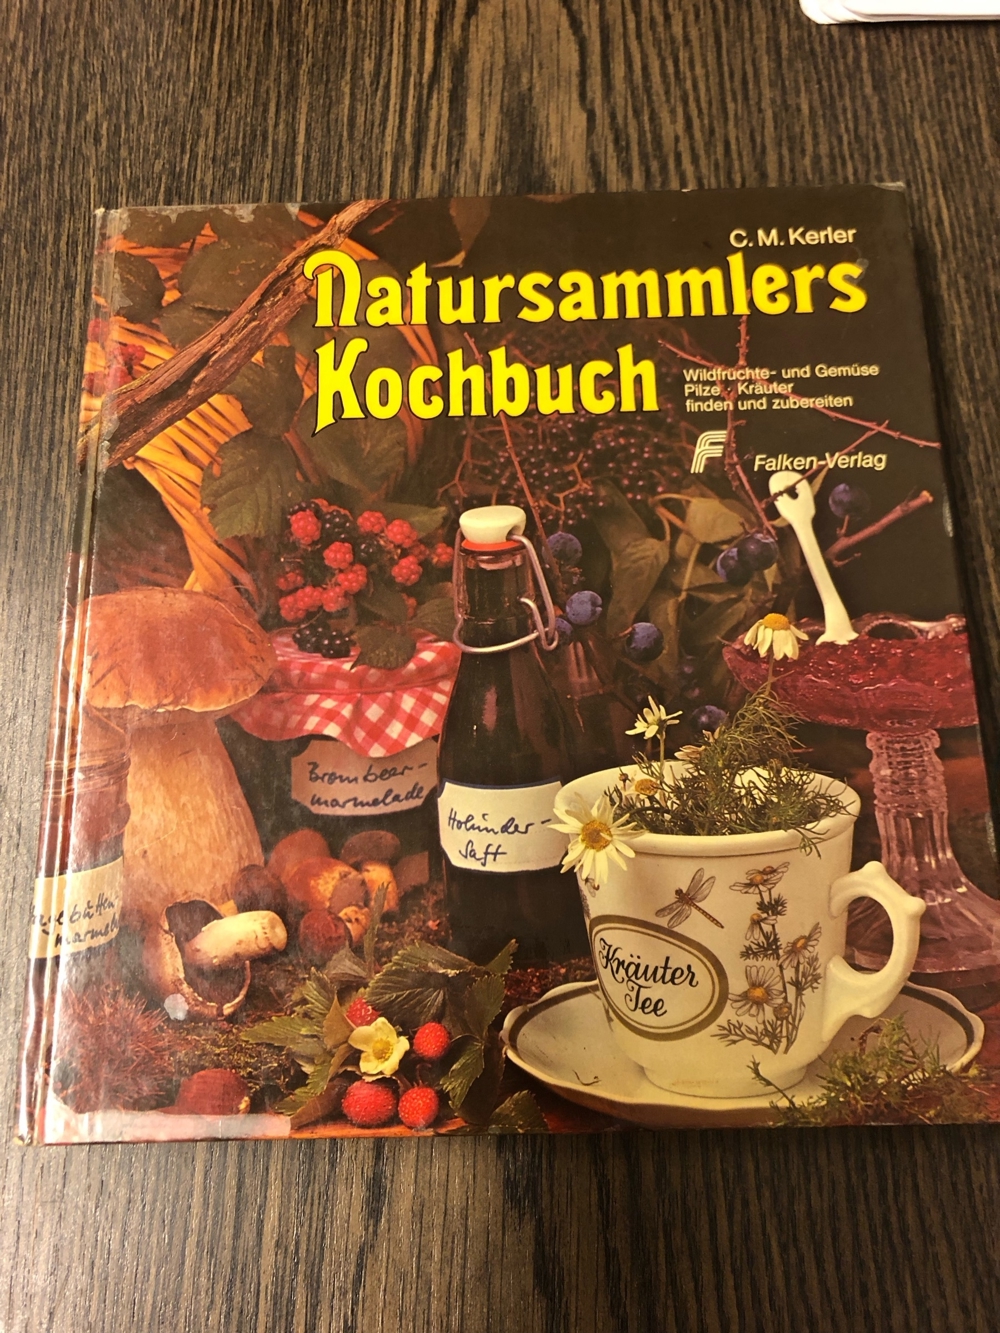 Natursammlers Kochbuch, C. M. Kerler